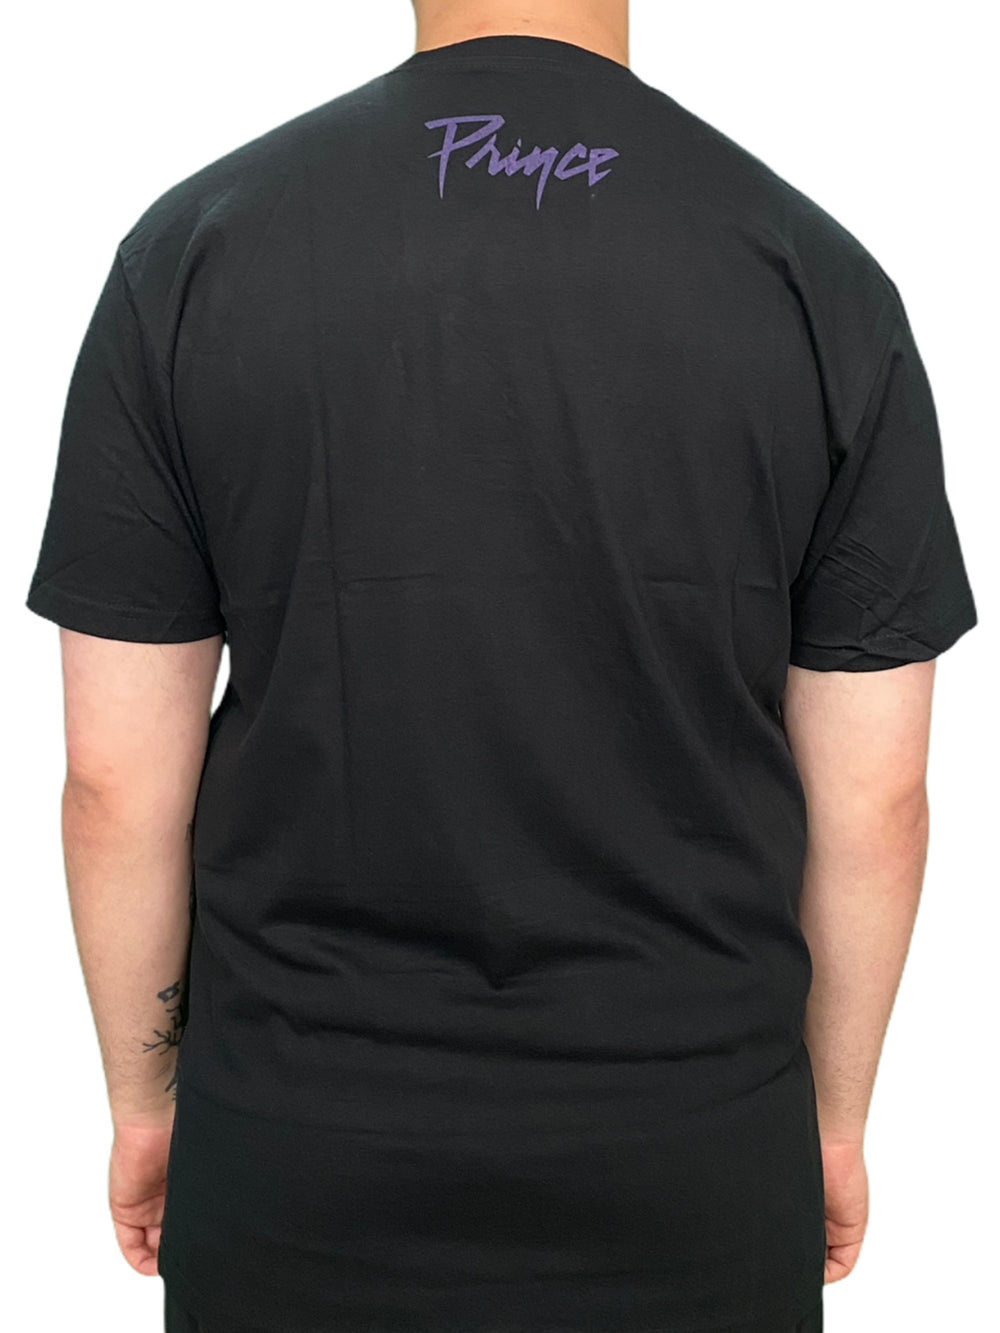 Prince – Official Martin Homent Artwork Purple Rain Unisex T Shirt LARGE